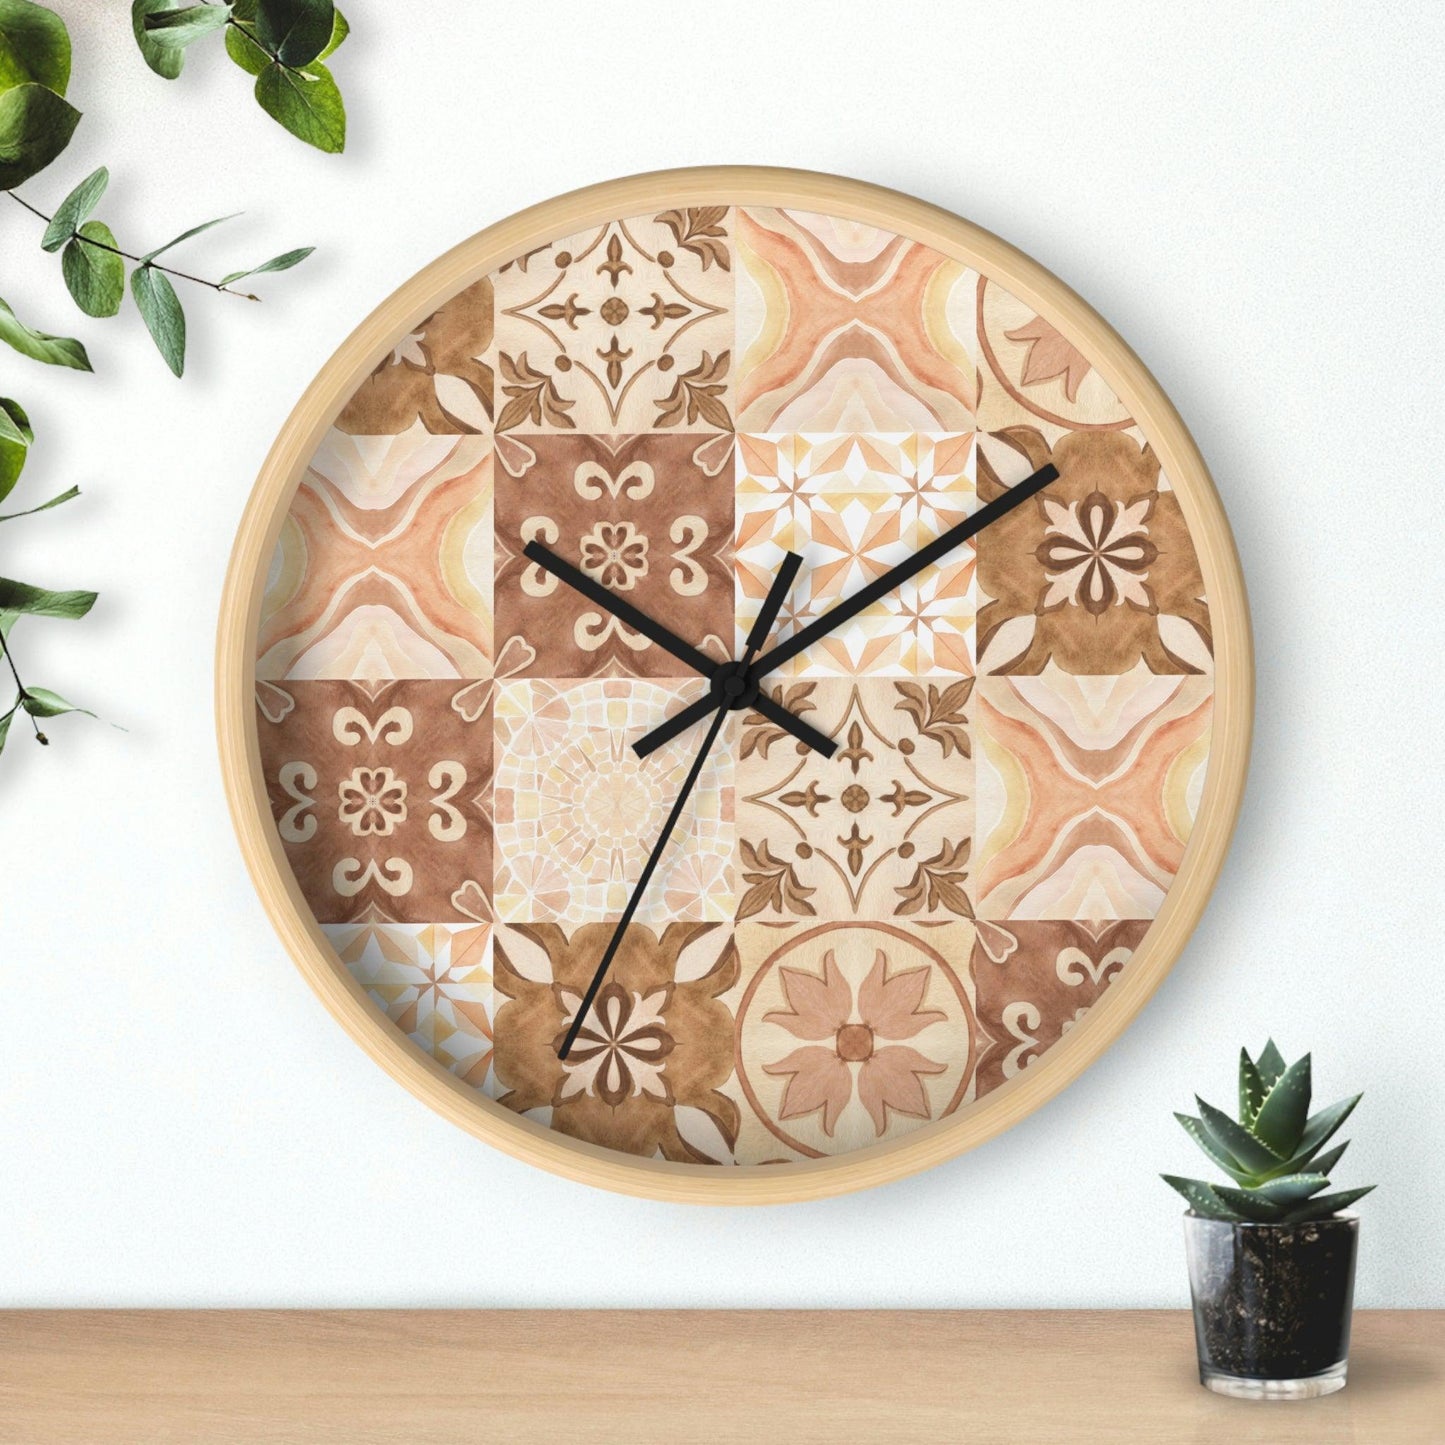 Moroccan Desert Tile Wall Clock - The Global Wanderer